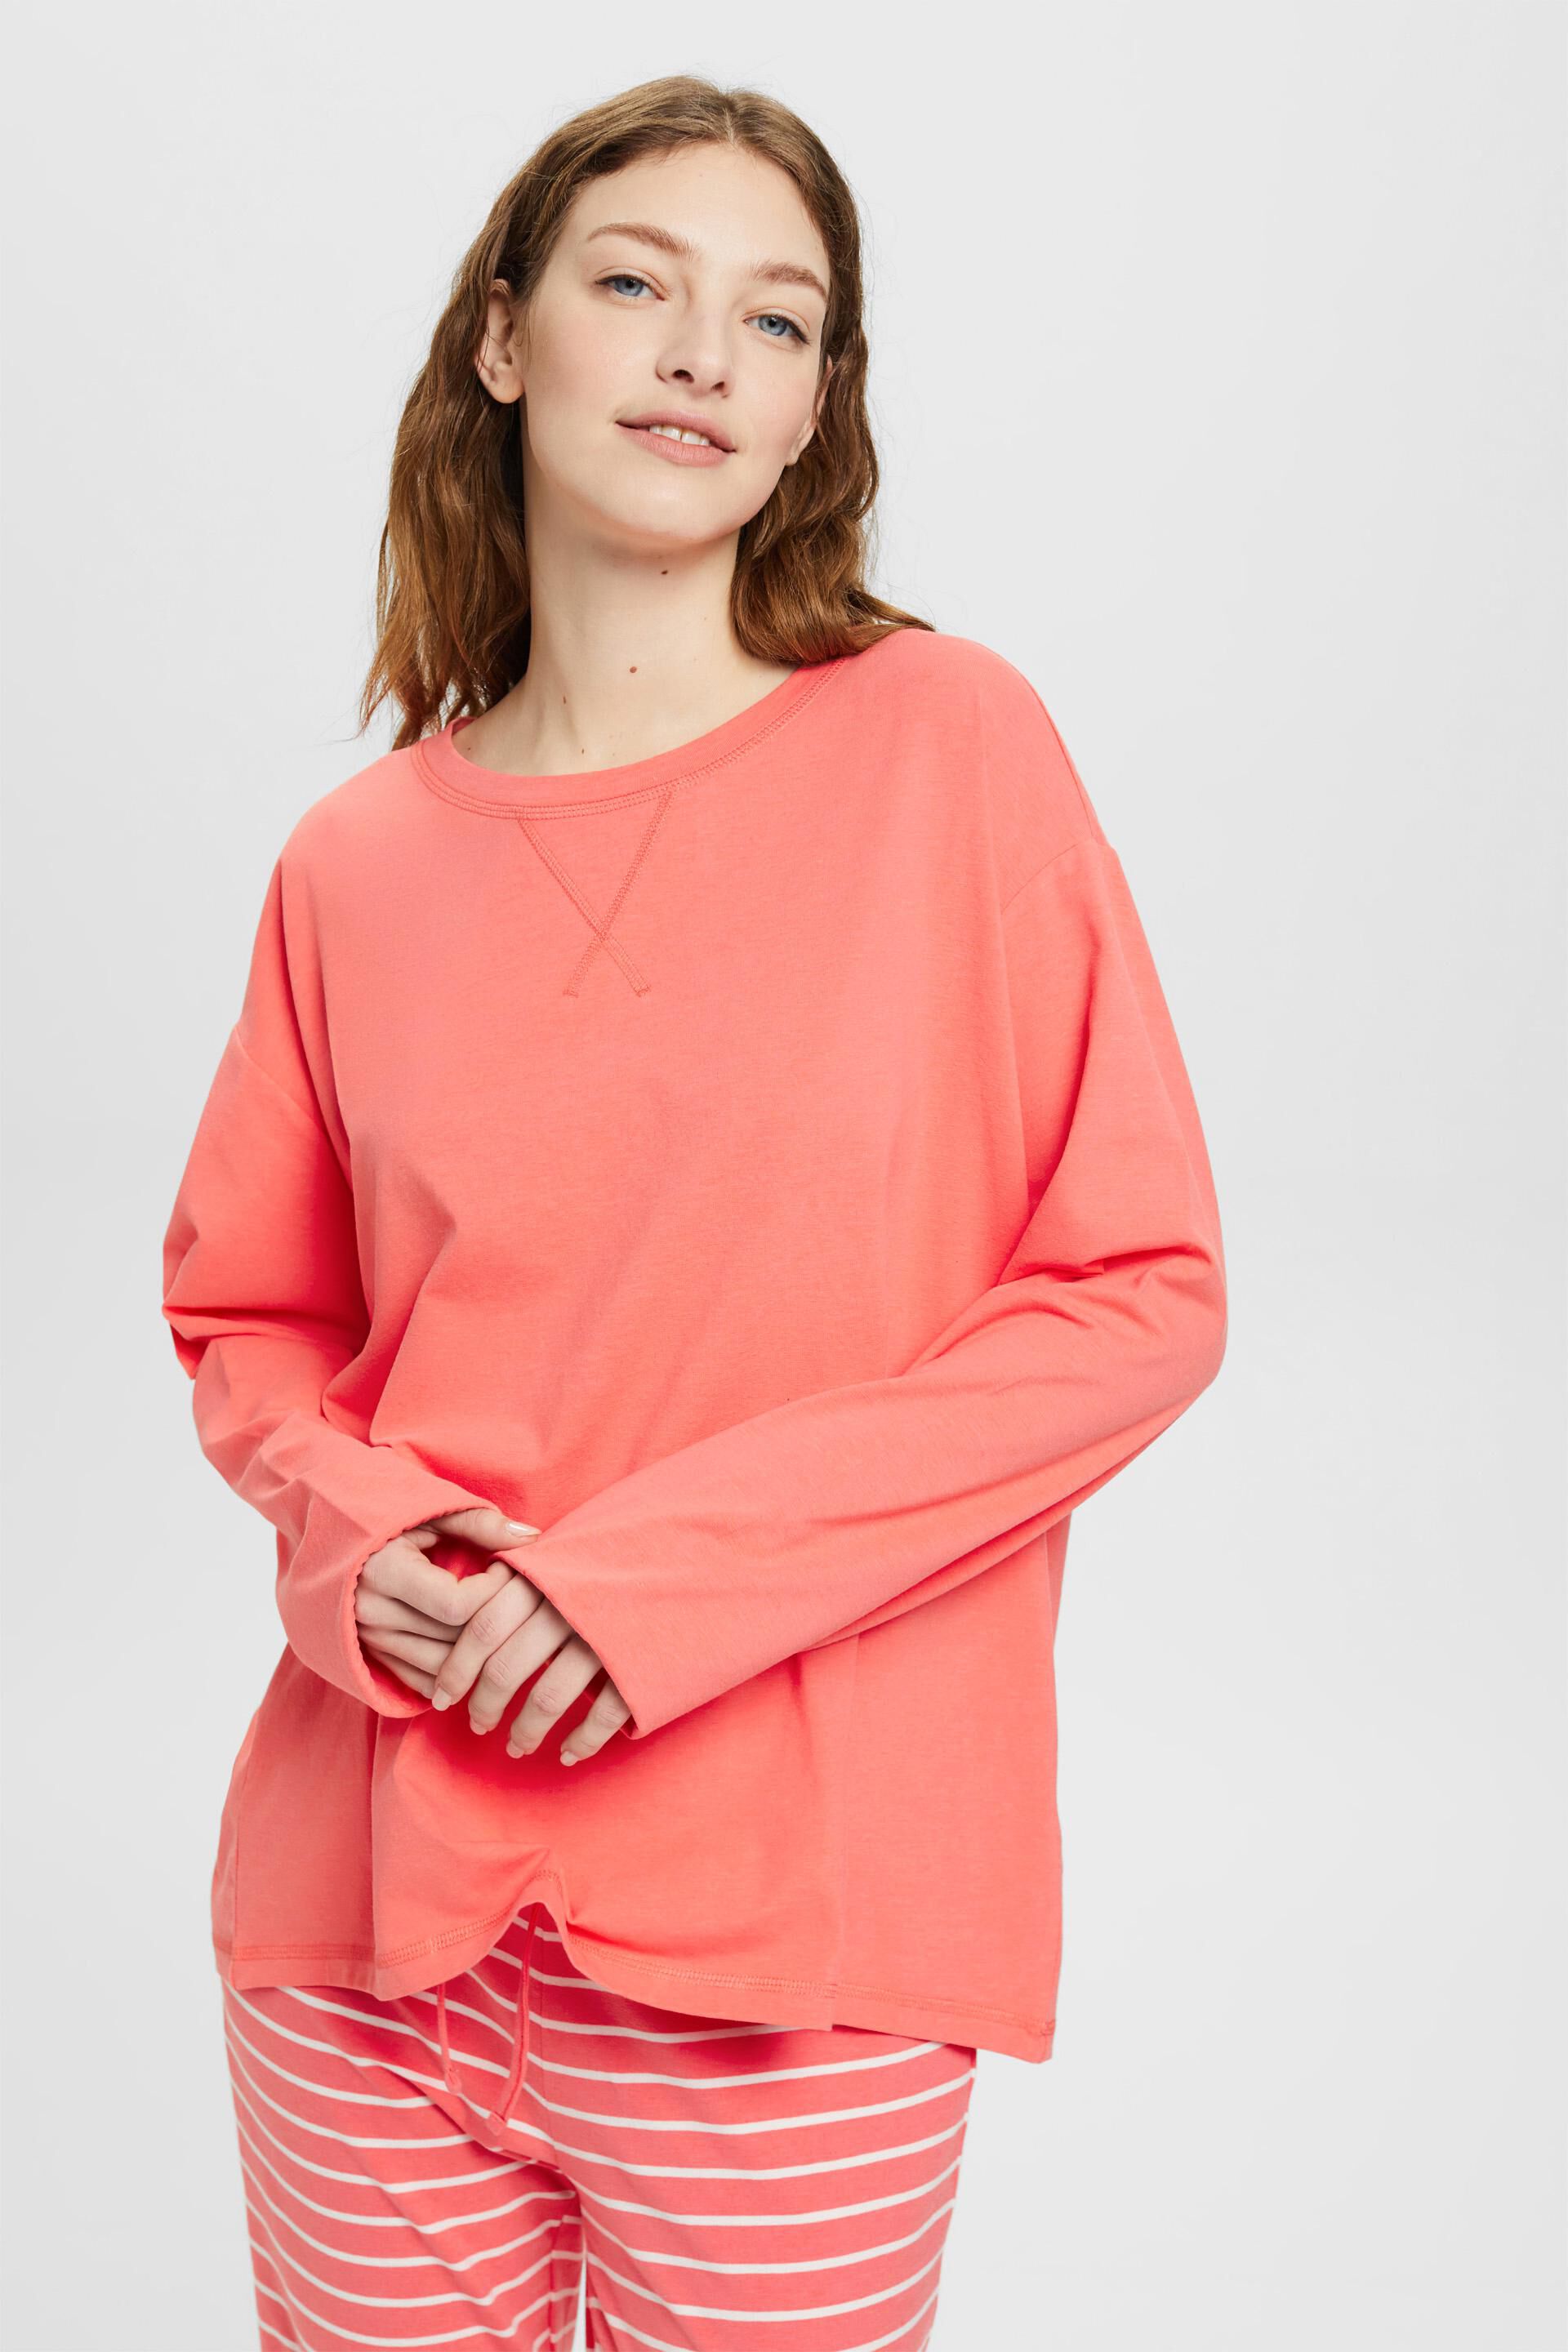 Esprit top Long-sleeved pyjama